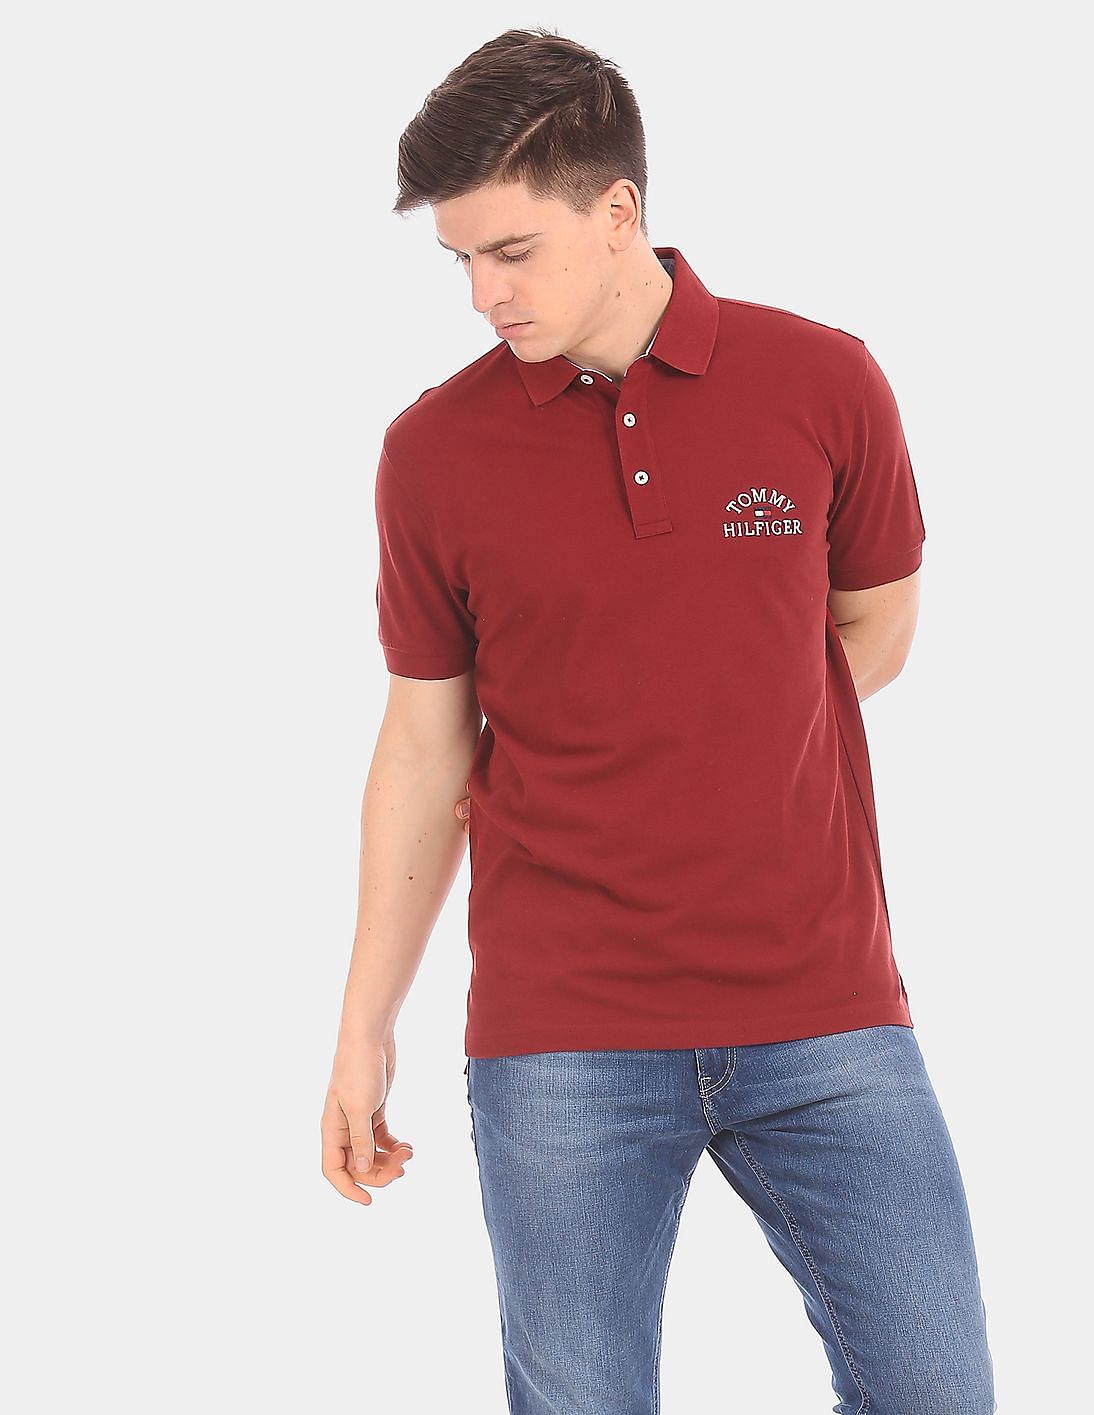 Buy Tommy Hilfiger Men Men Red Regular Fit Pique Polo Shirt - NNNOW.com